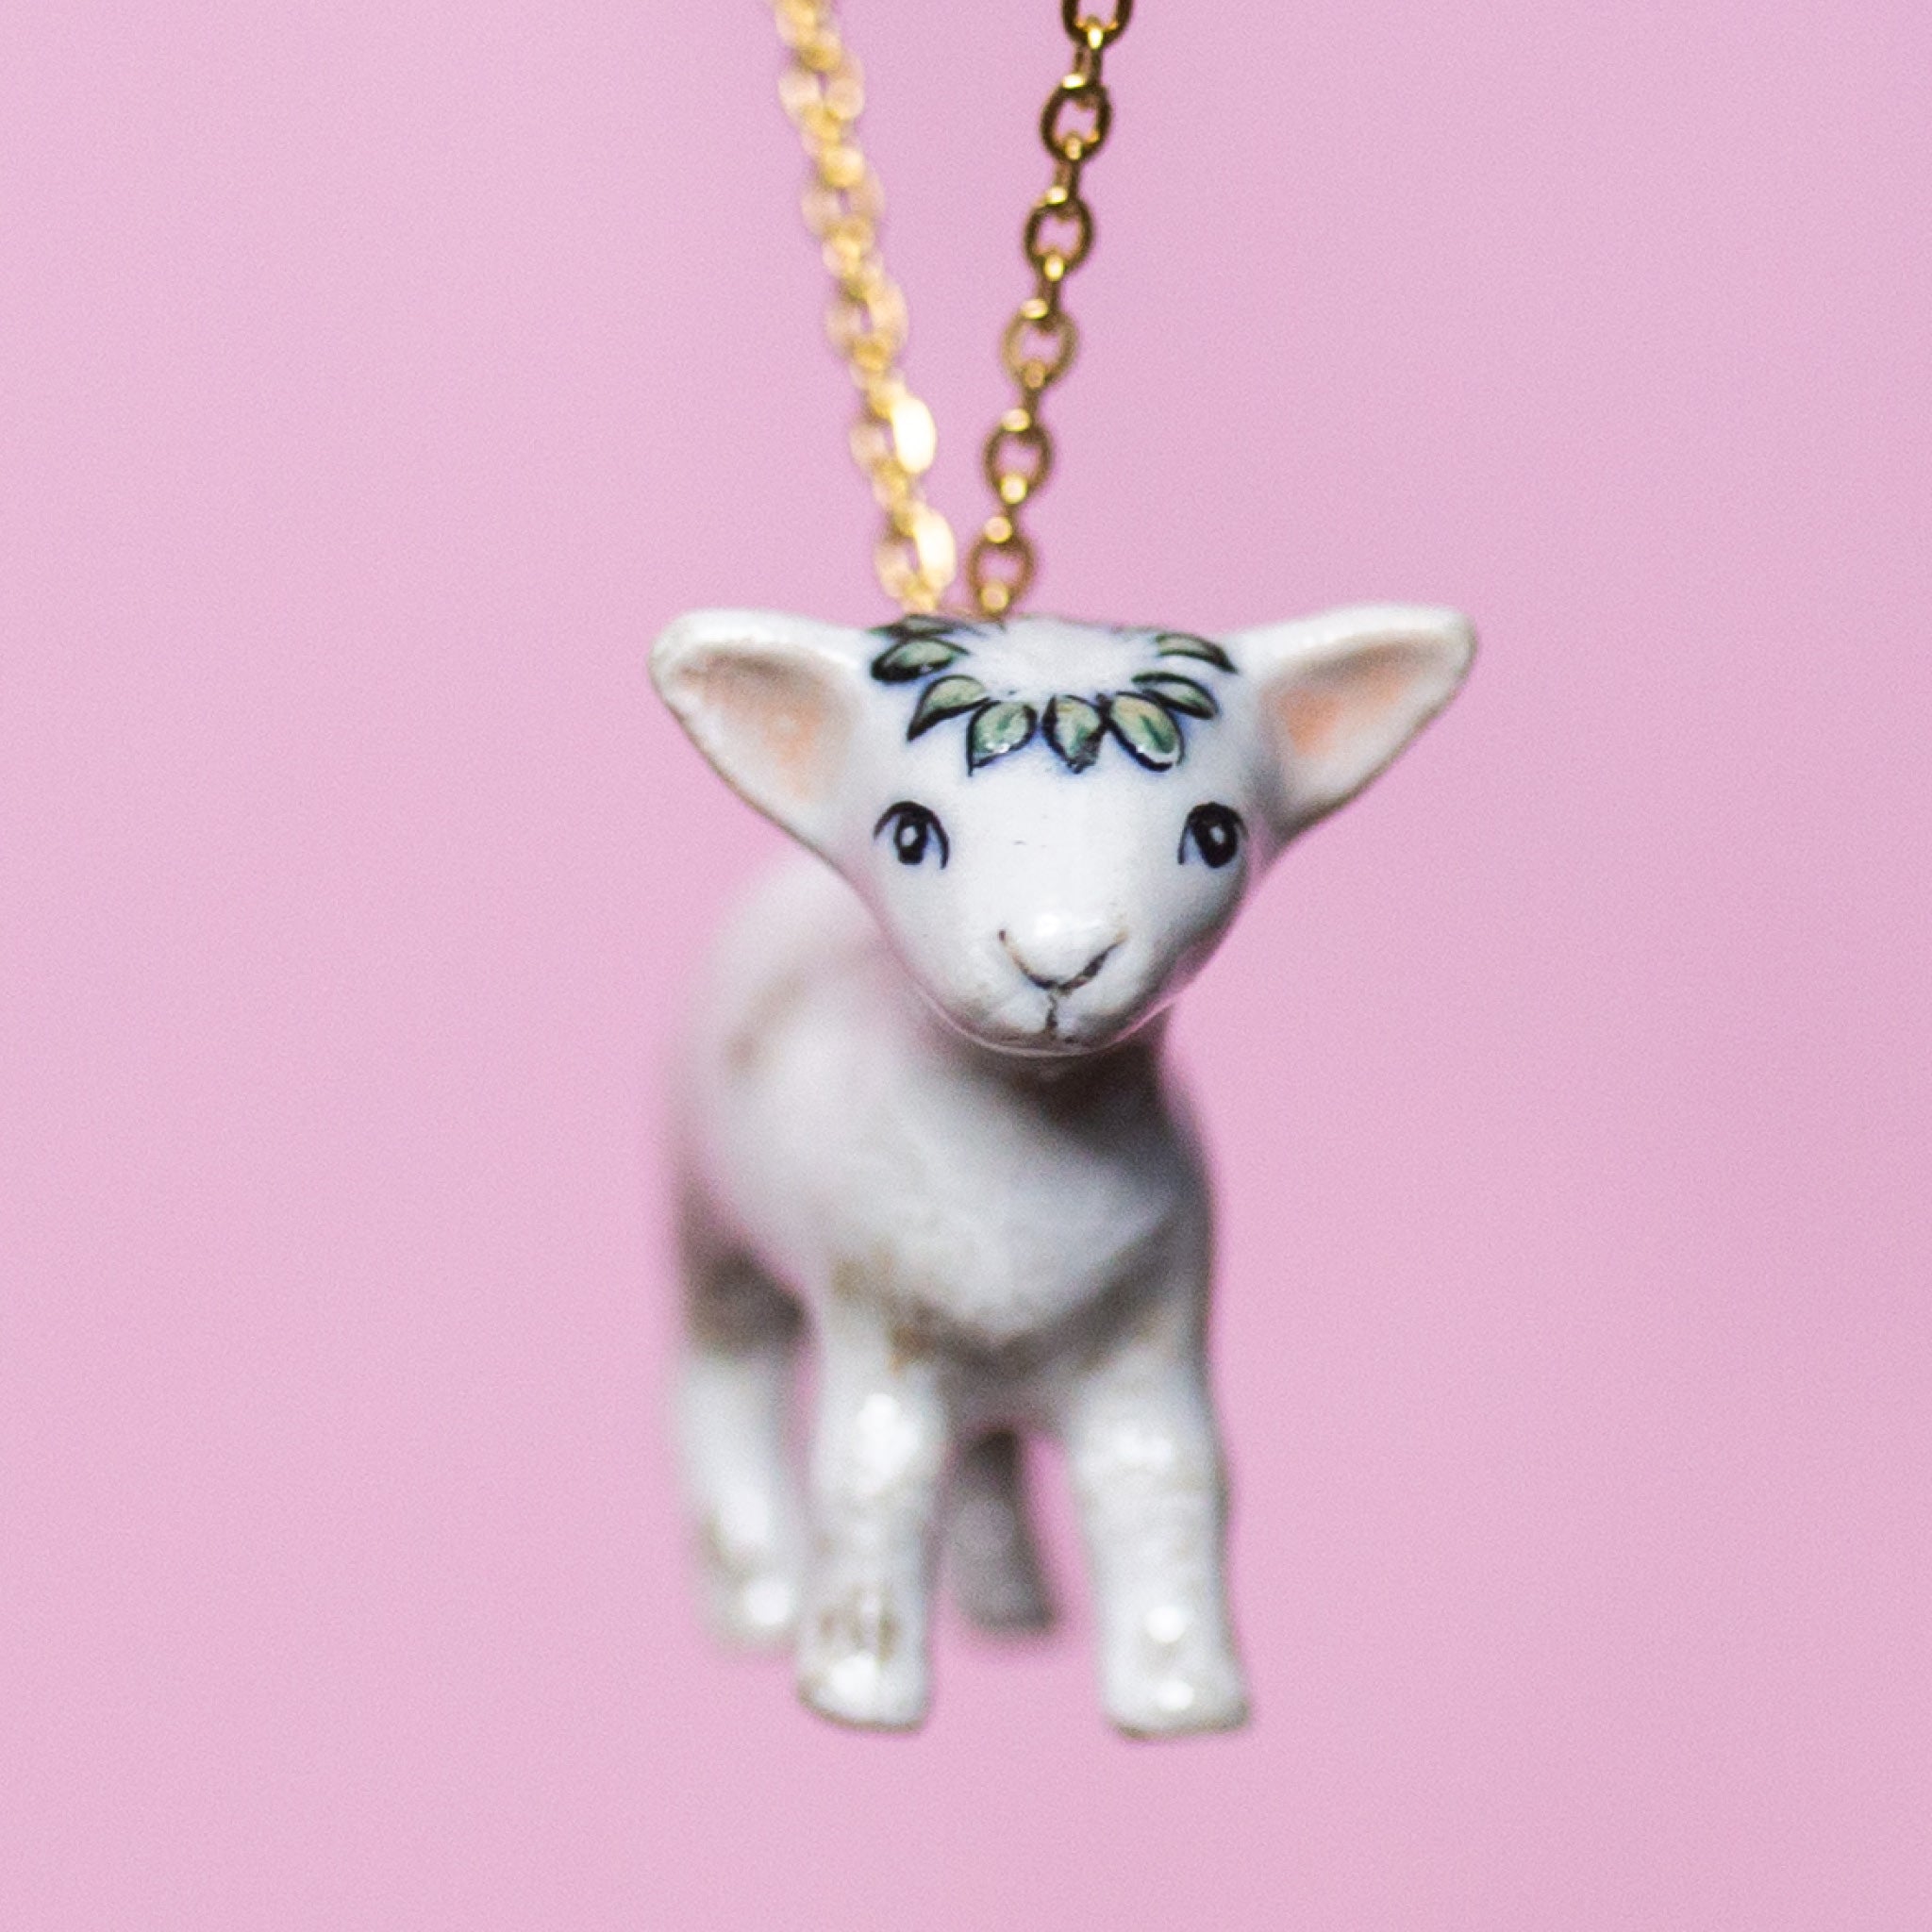 Lamb Necklace | Camp Hollow Ceramic Animal Jewelry Sheep